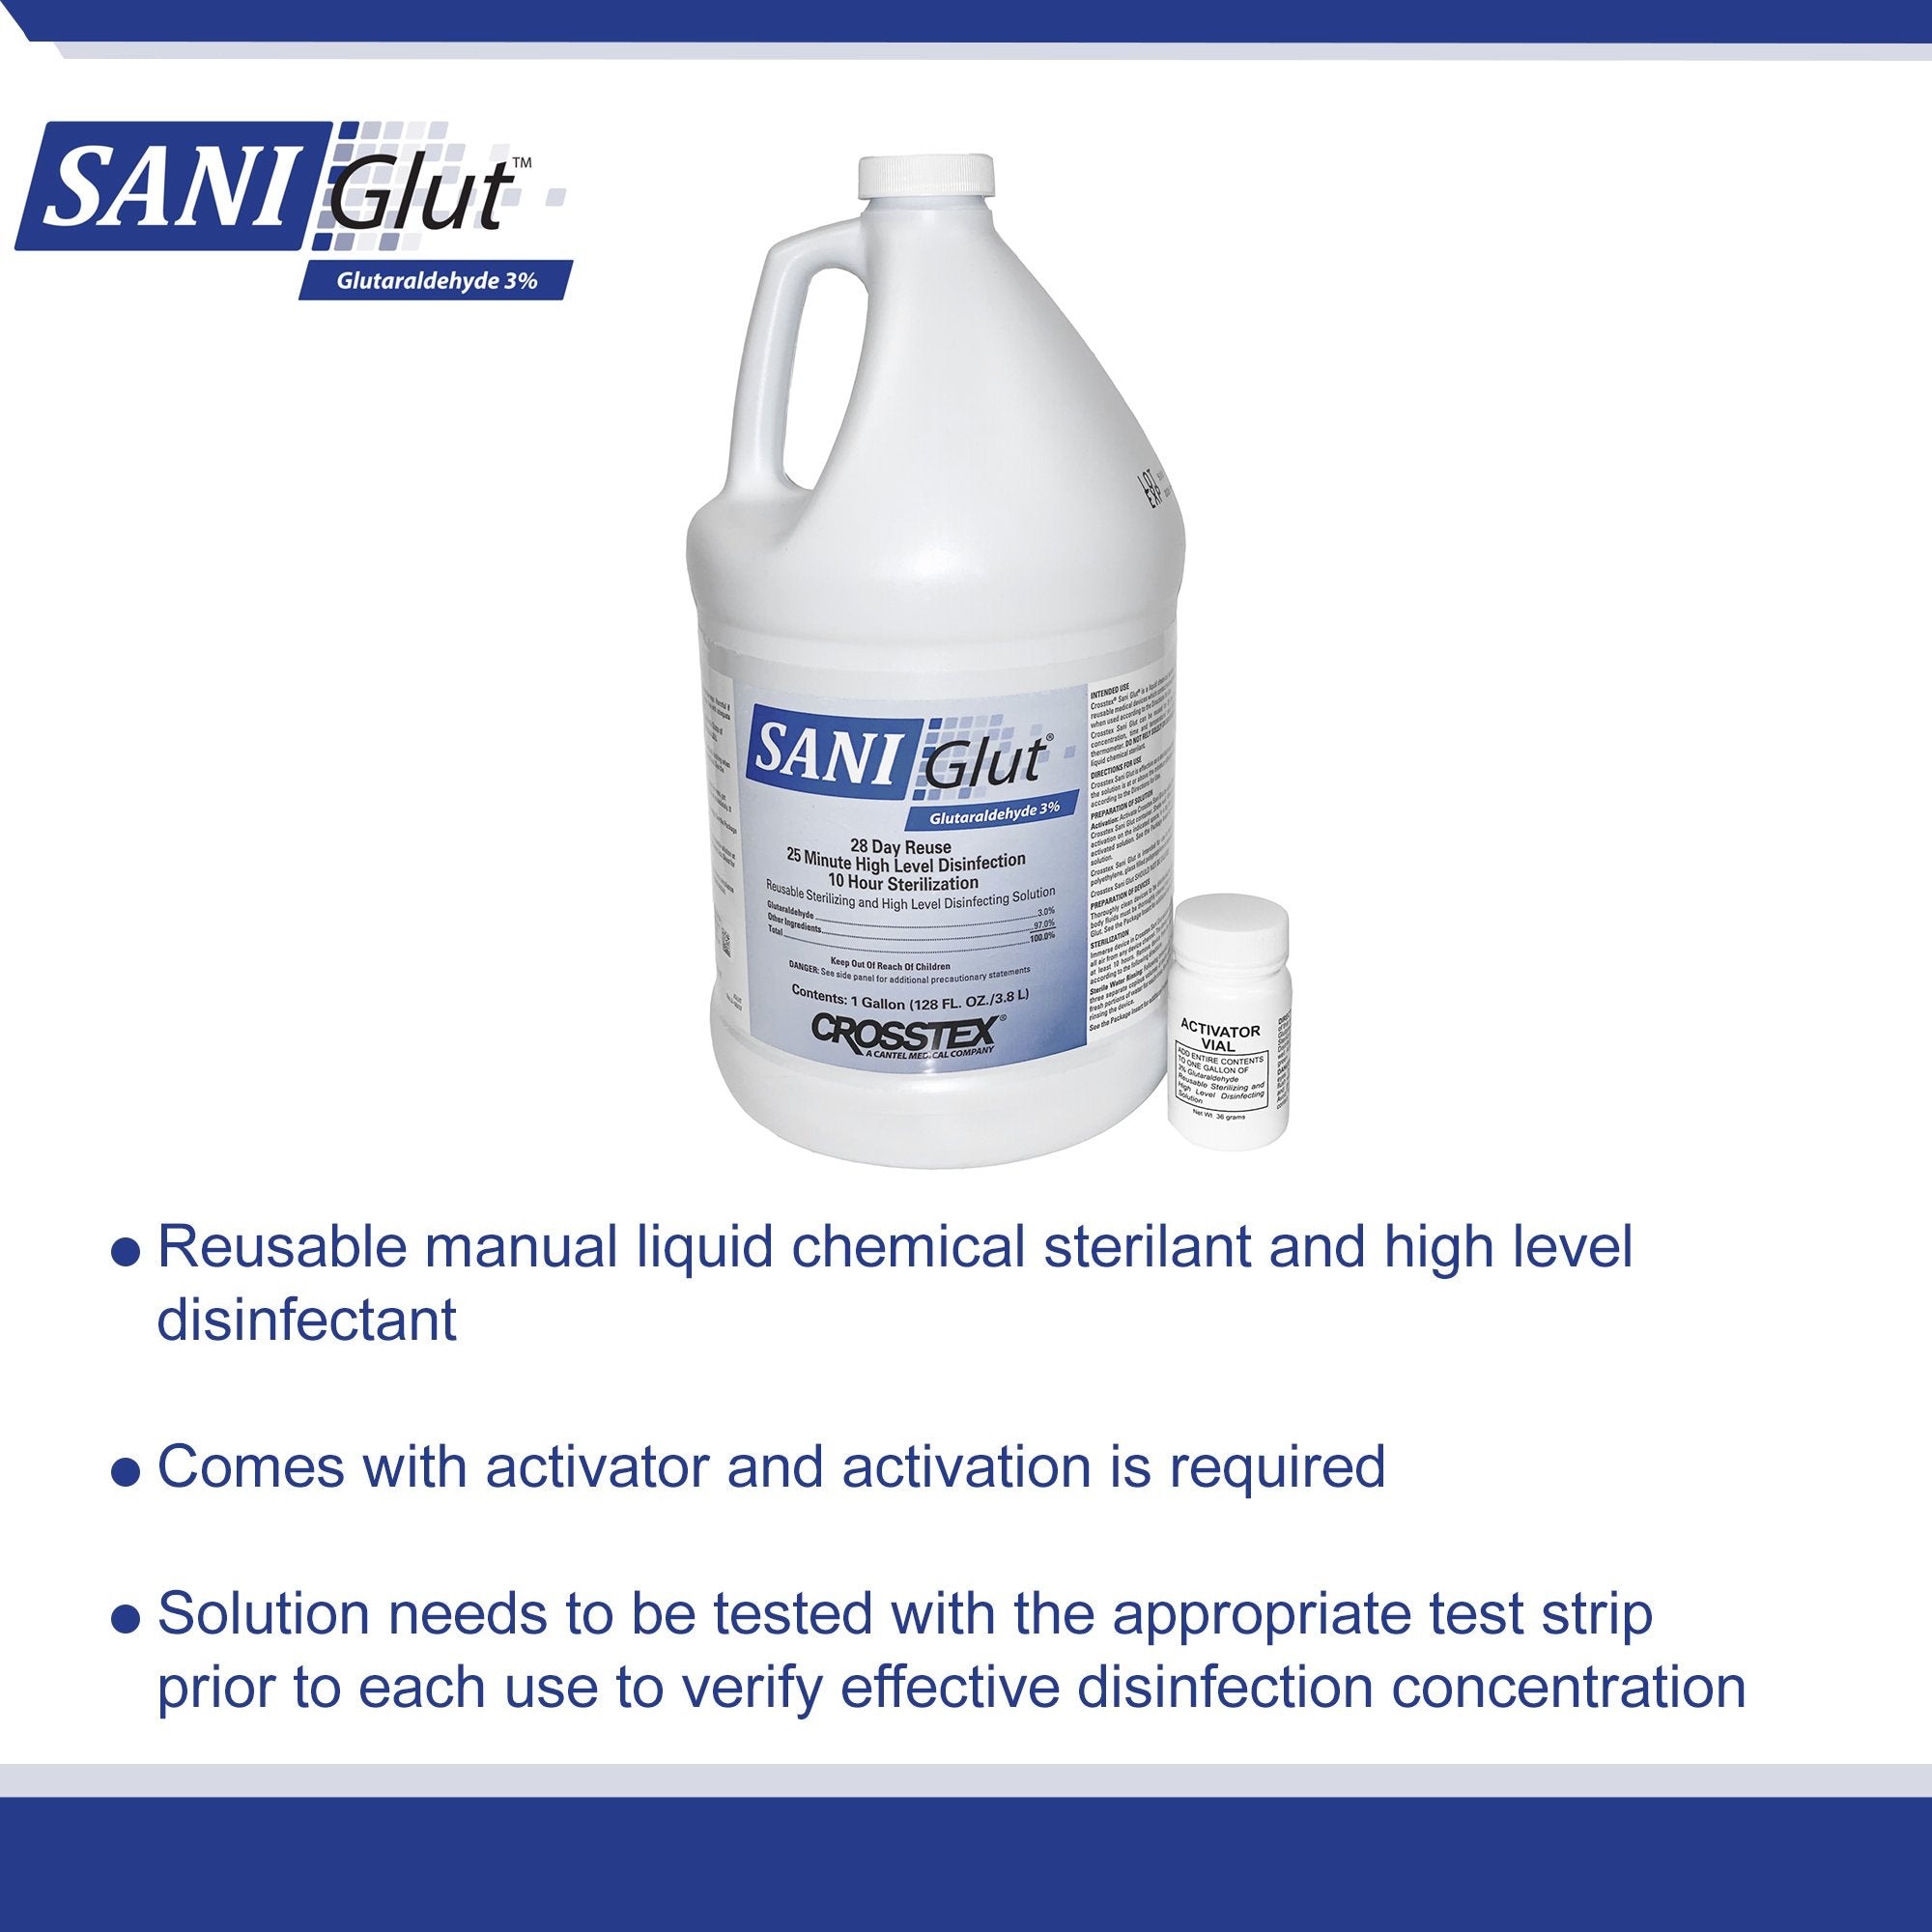 SANI Glut? Glutaraldehyde High Level Disinfectant